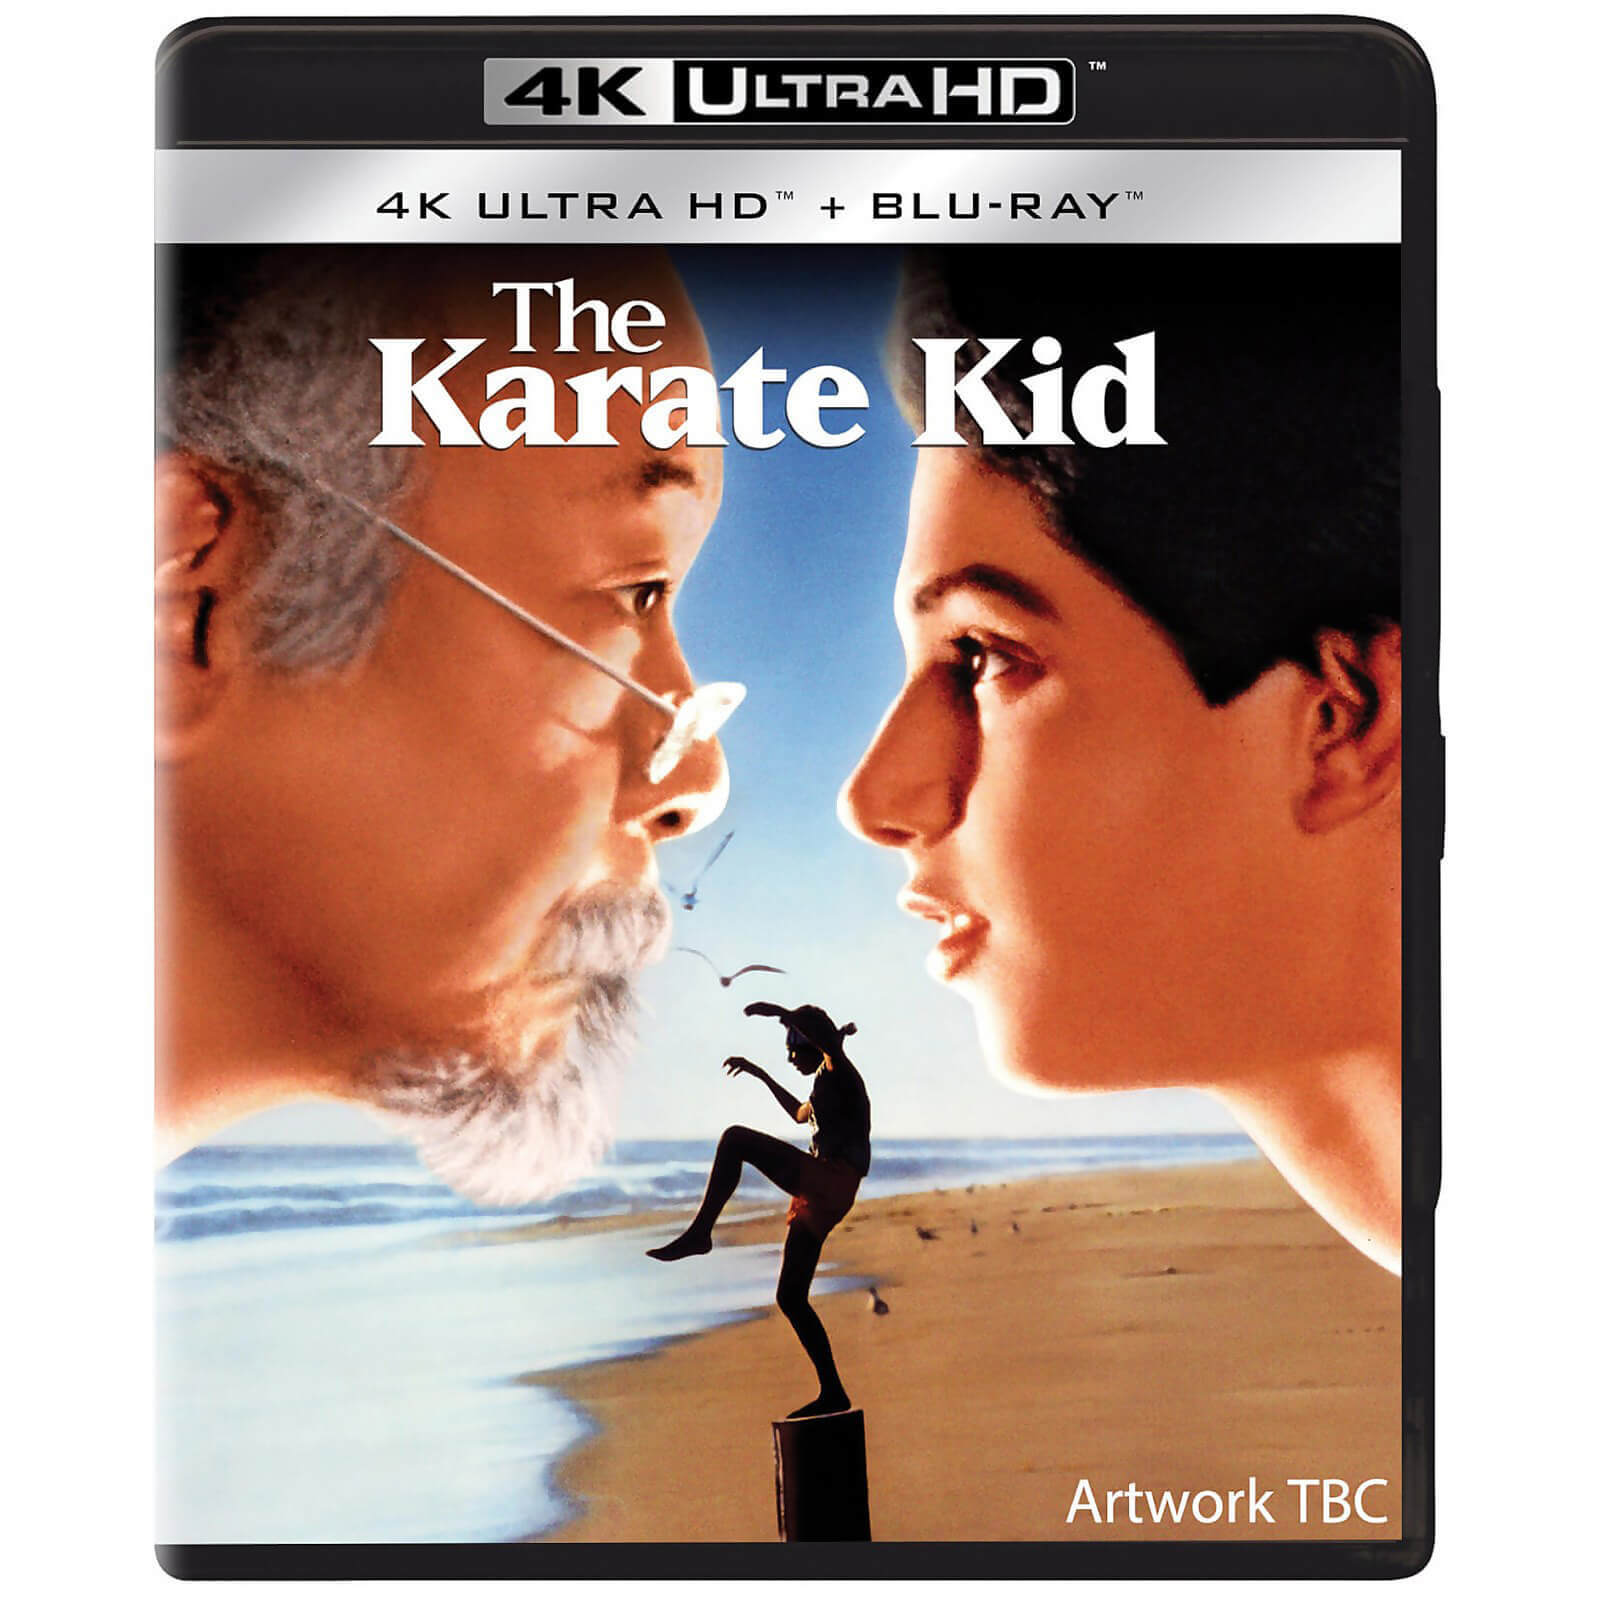 The Karate Kid (1984) - 35th Anniversary (2 Discs - 4K UHD & BD)